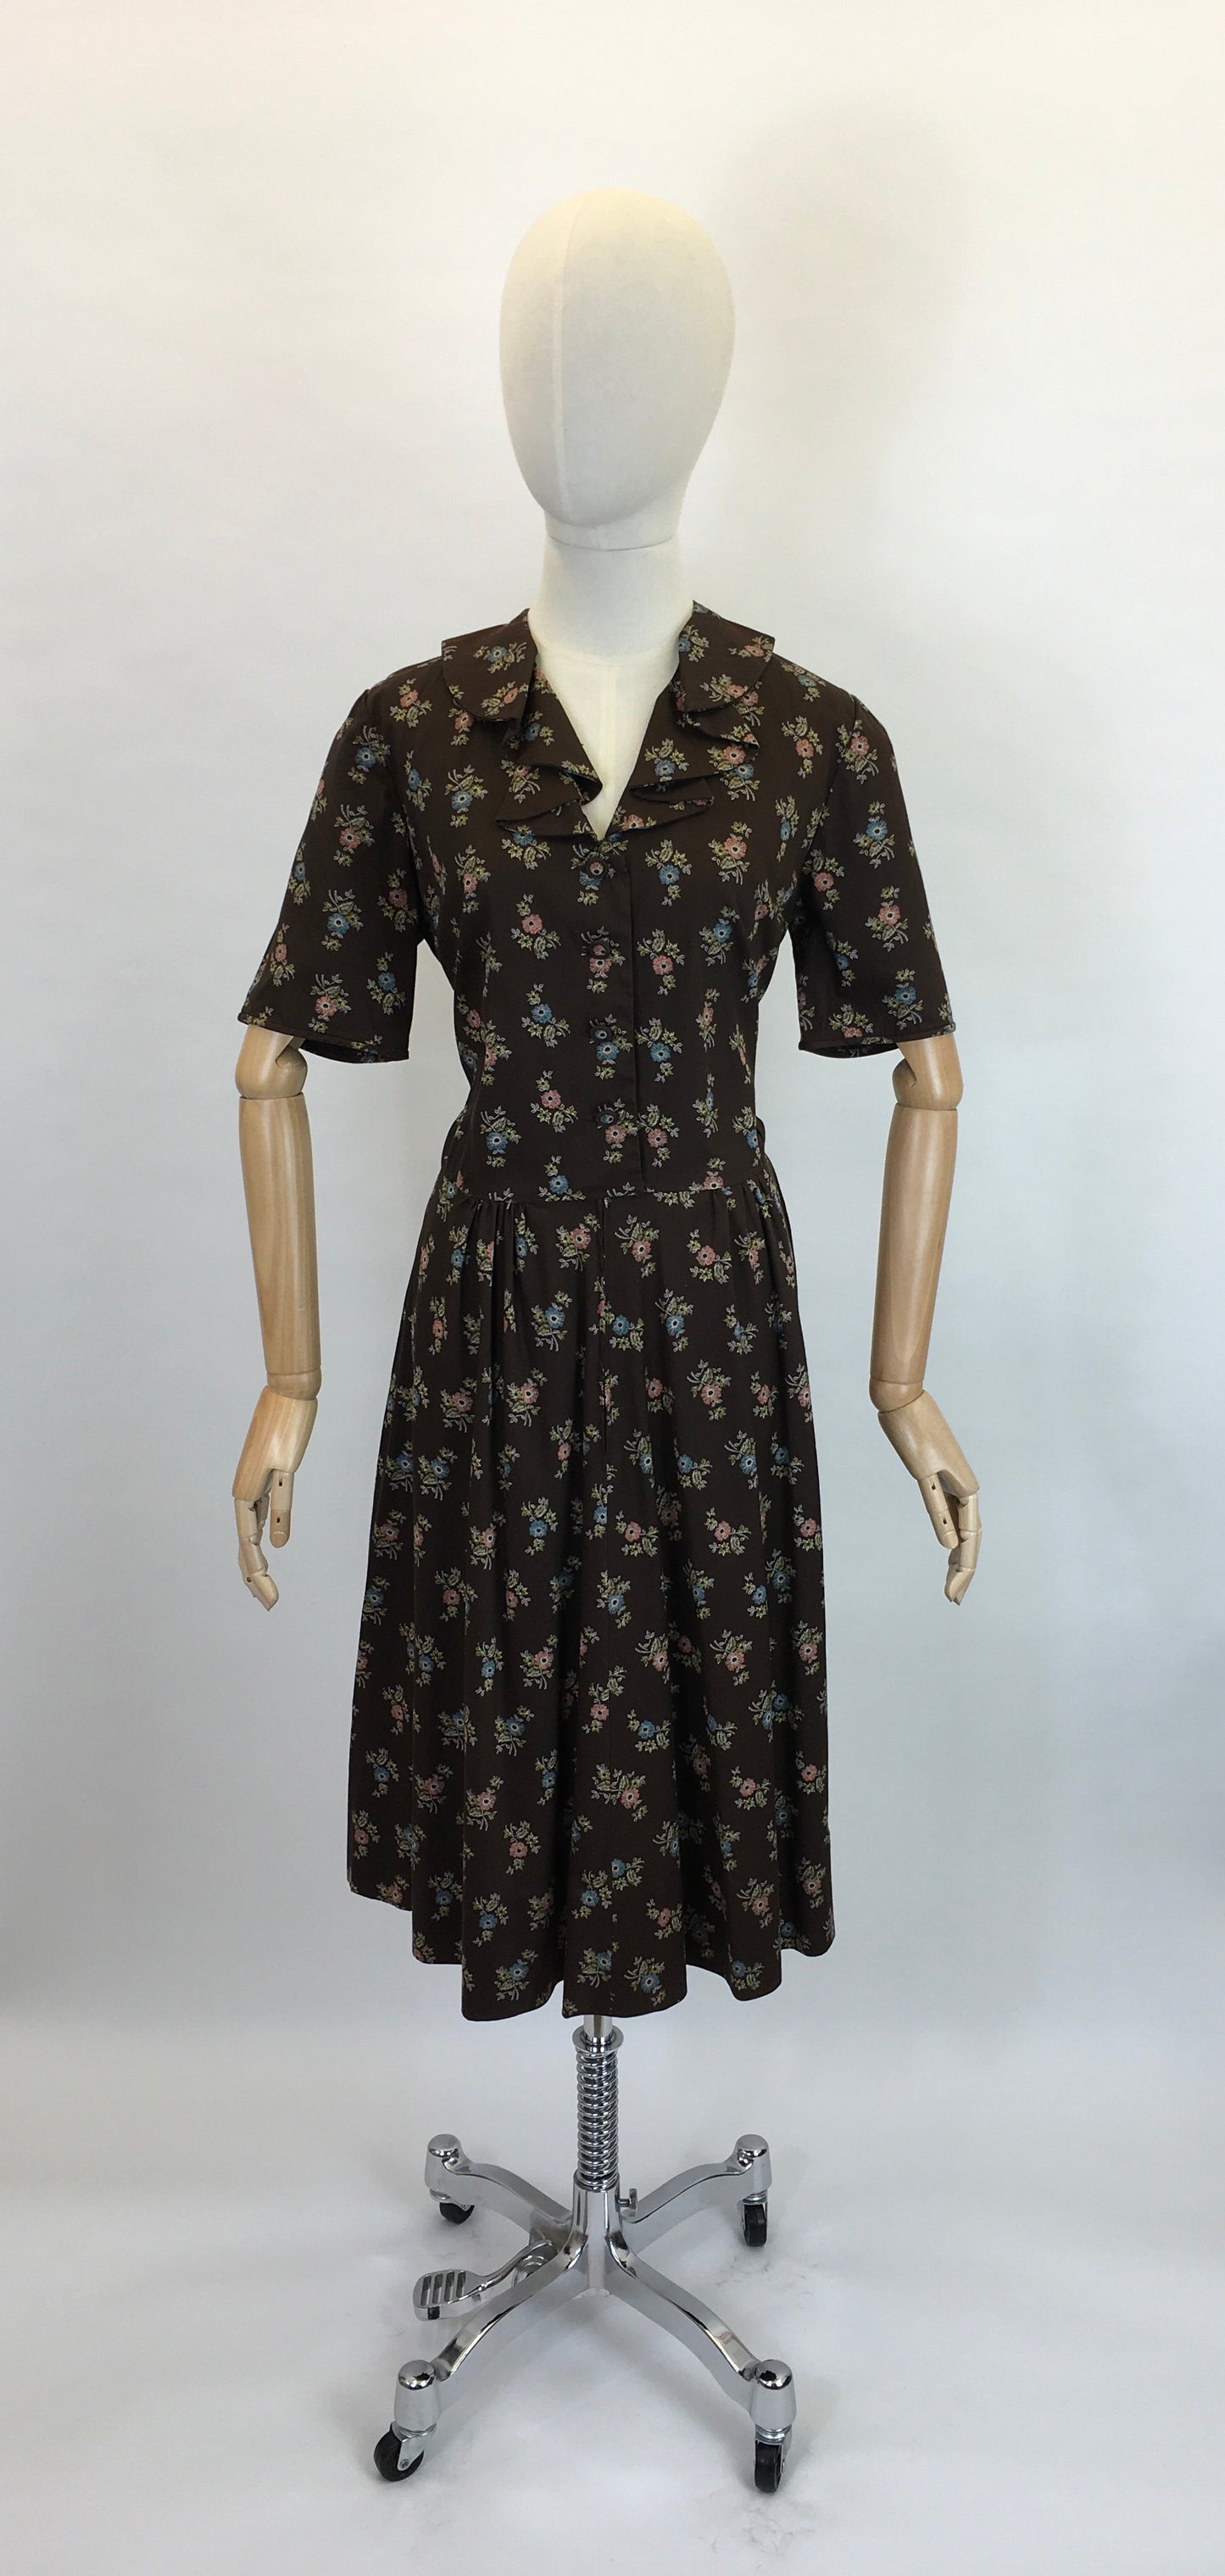 Original 1950’s Cute Floral Handmade Dress - Lovely Warm Brown, Terracotta, Blue and Greens